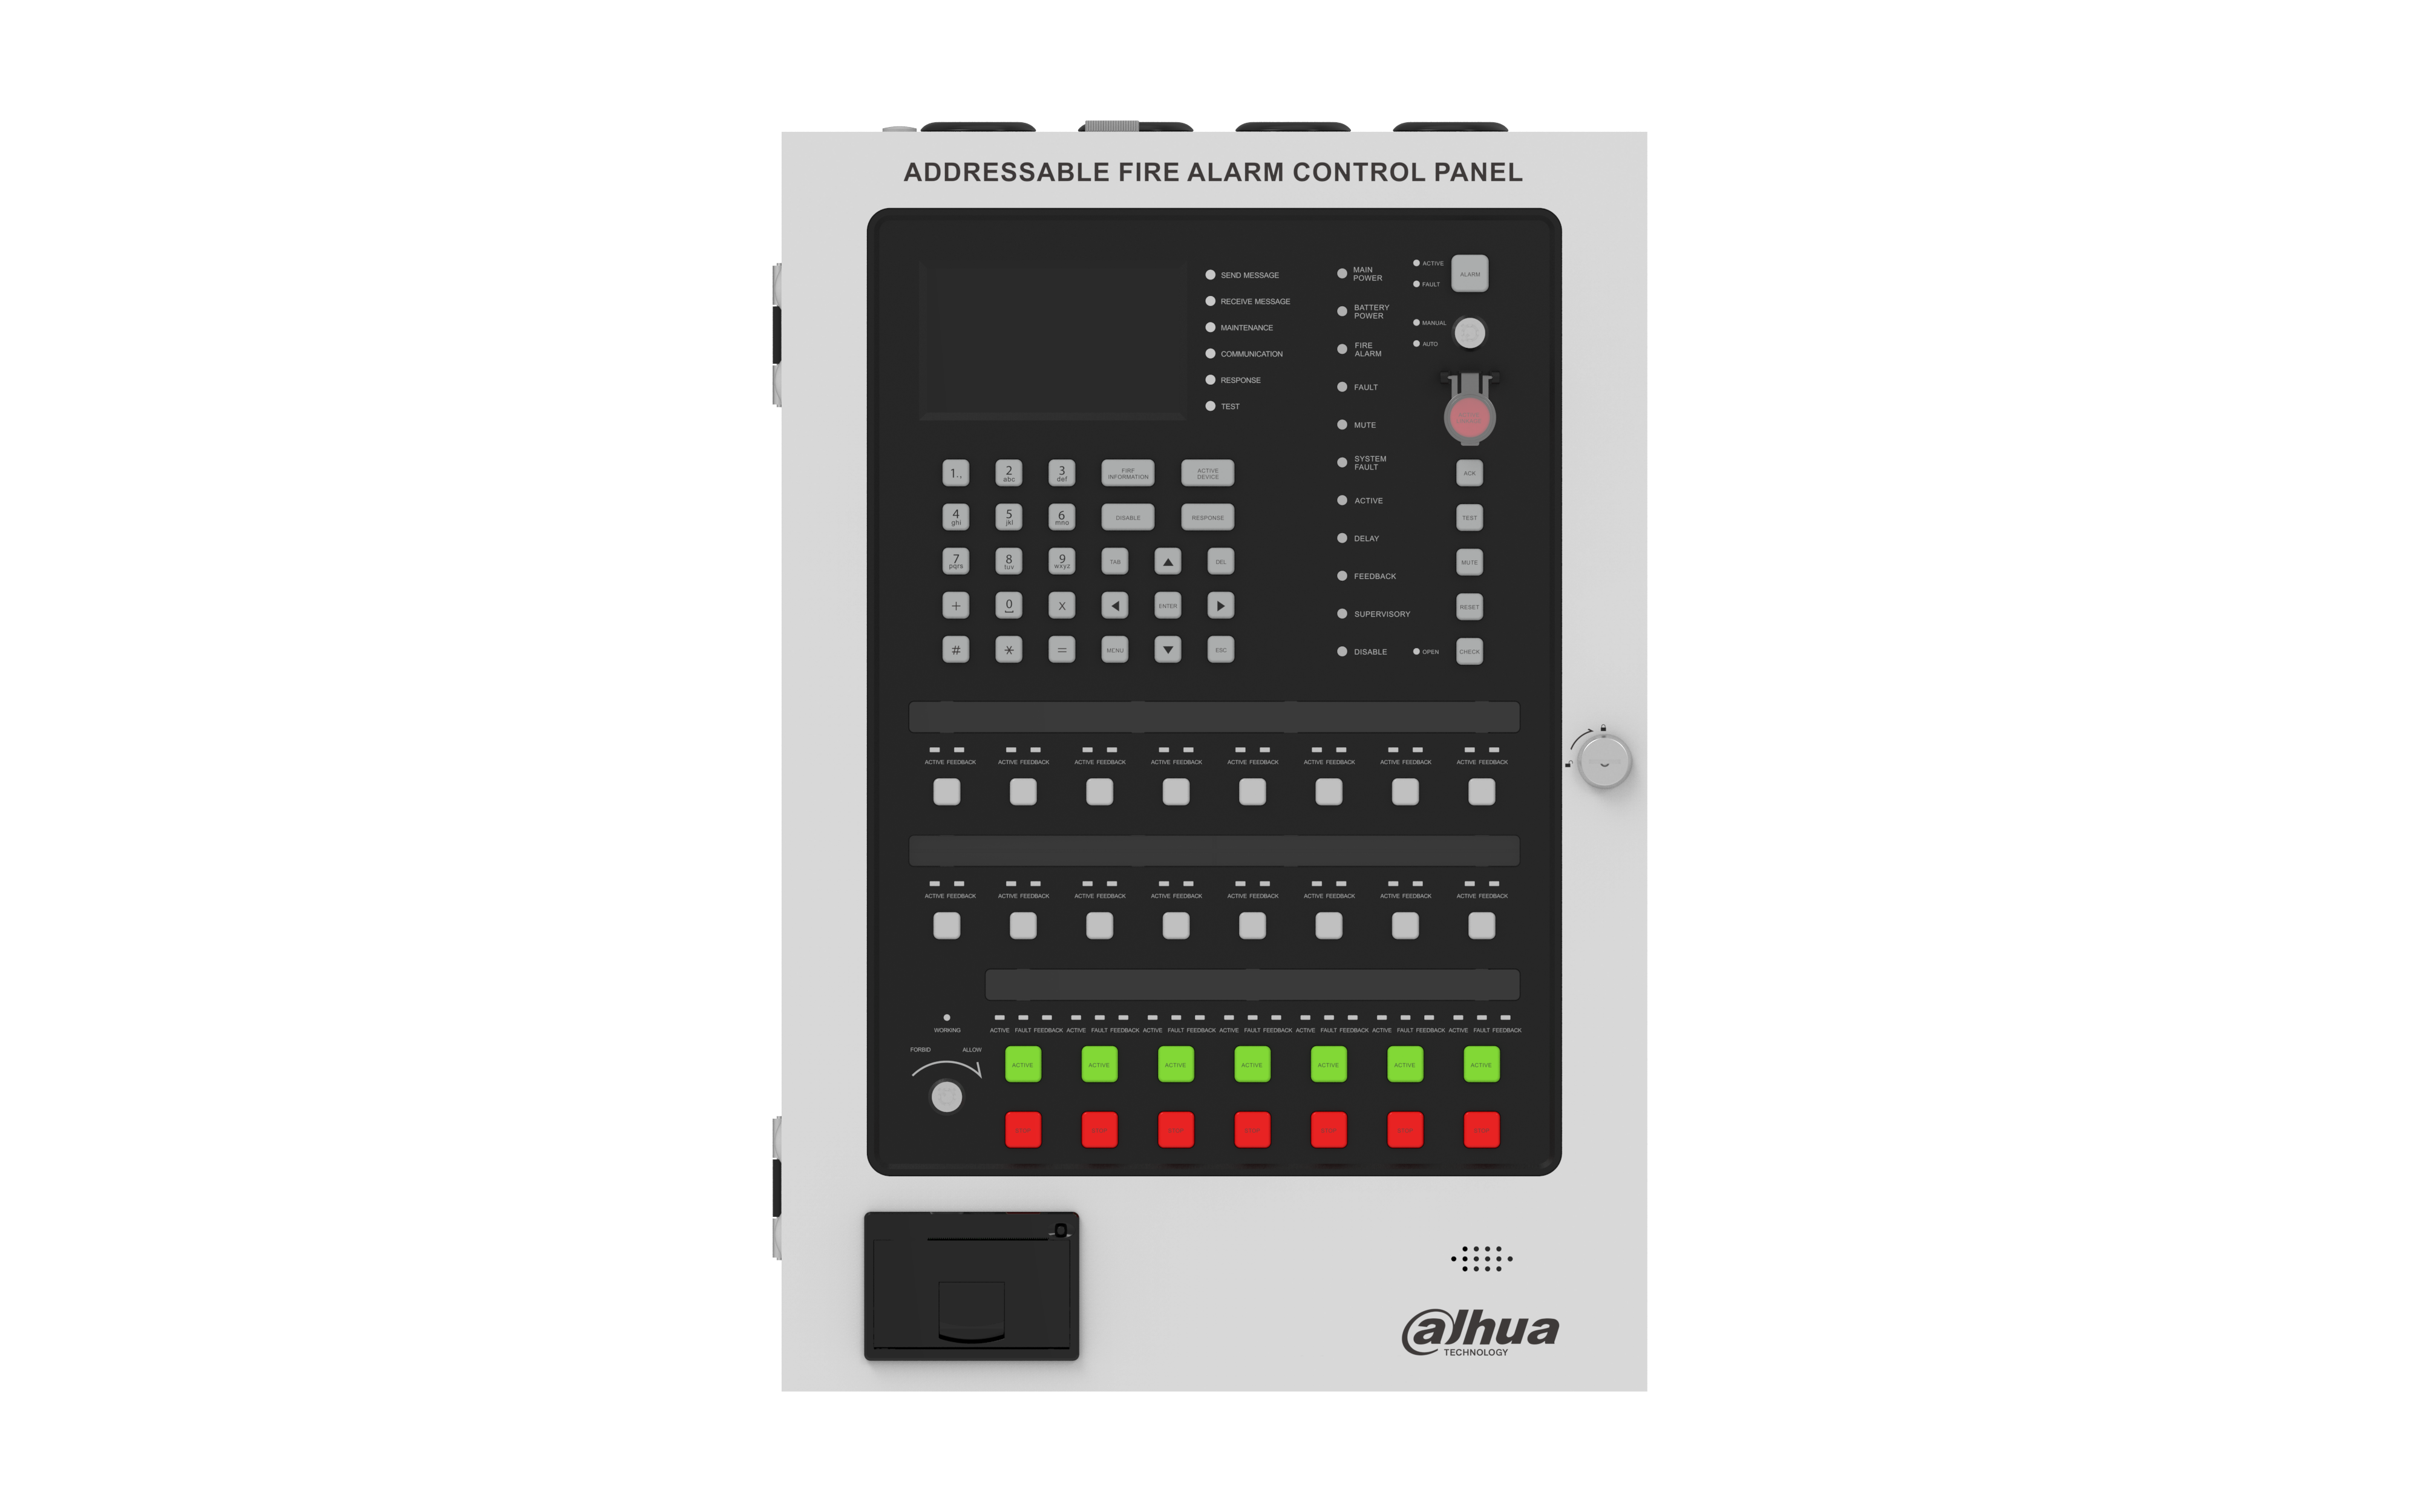 DAHUA HY-1022  Addressable Fire Alarm Control Panel